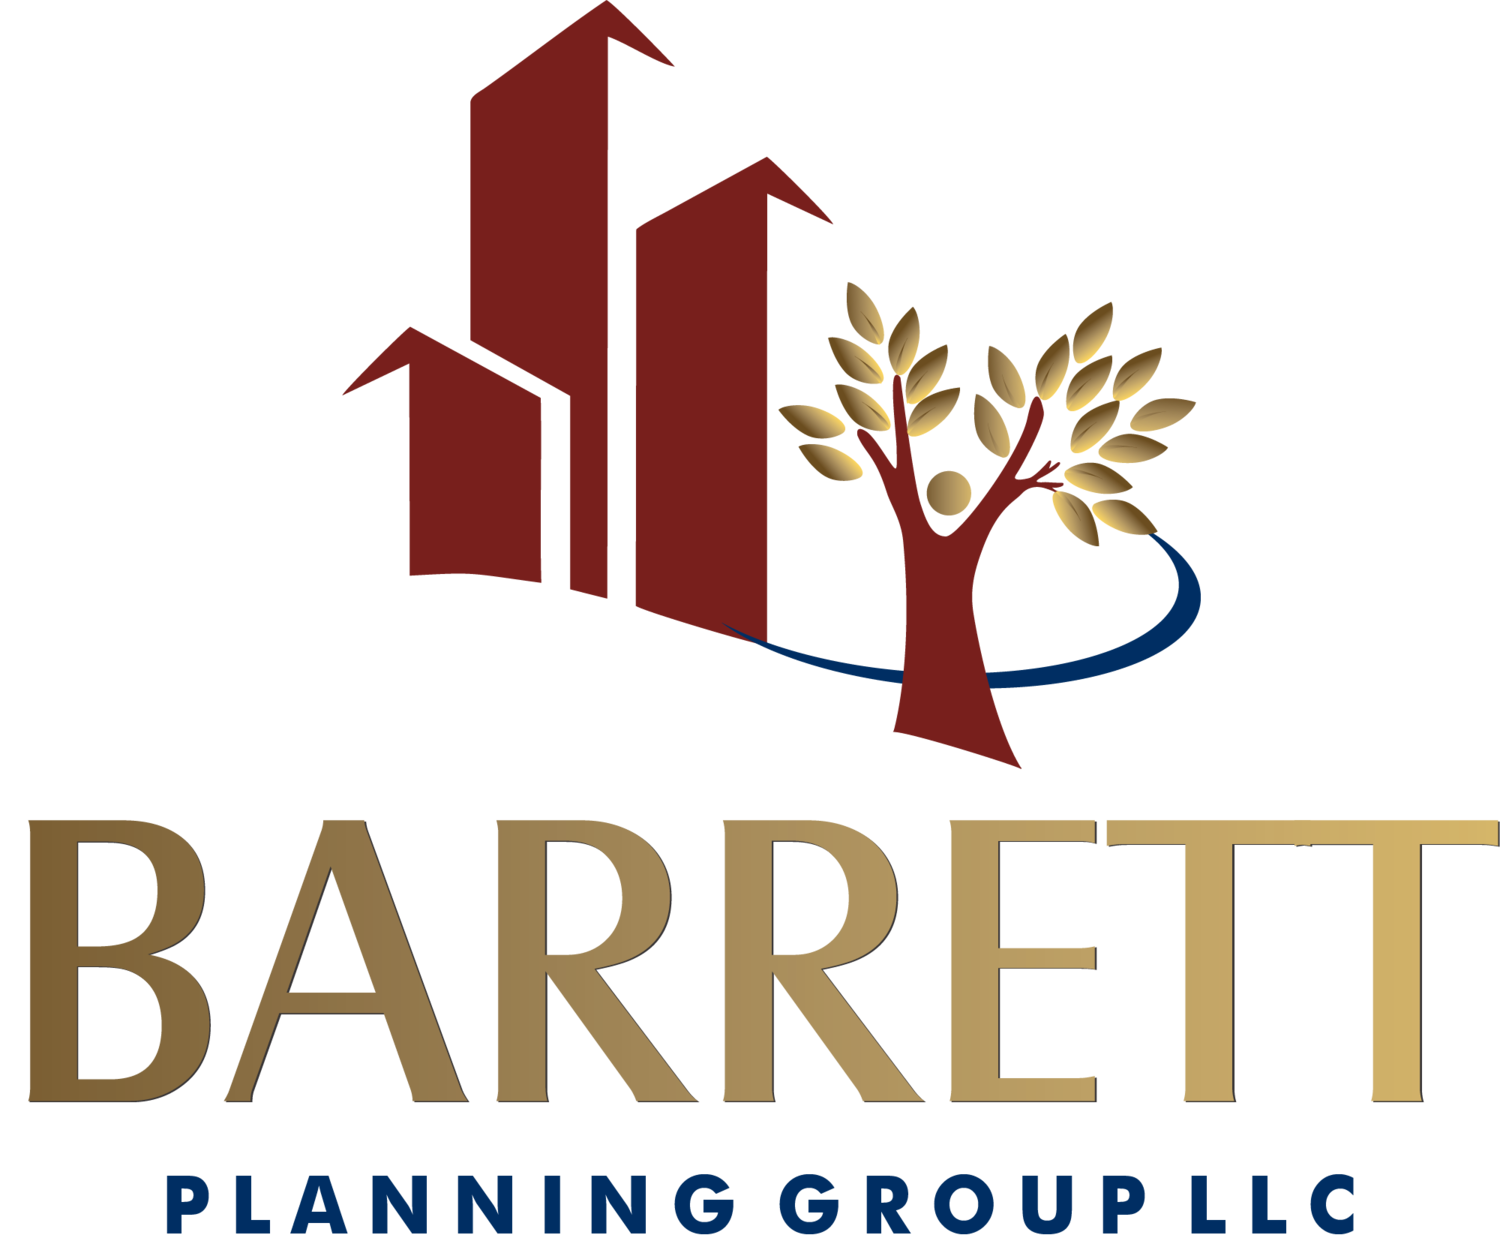 Barrett Planning Group LLC